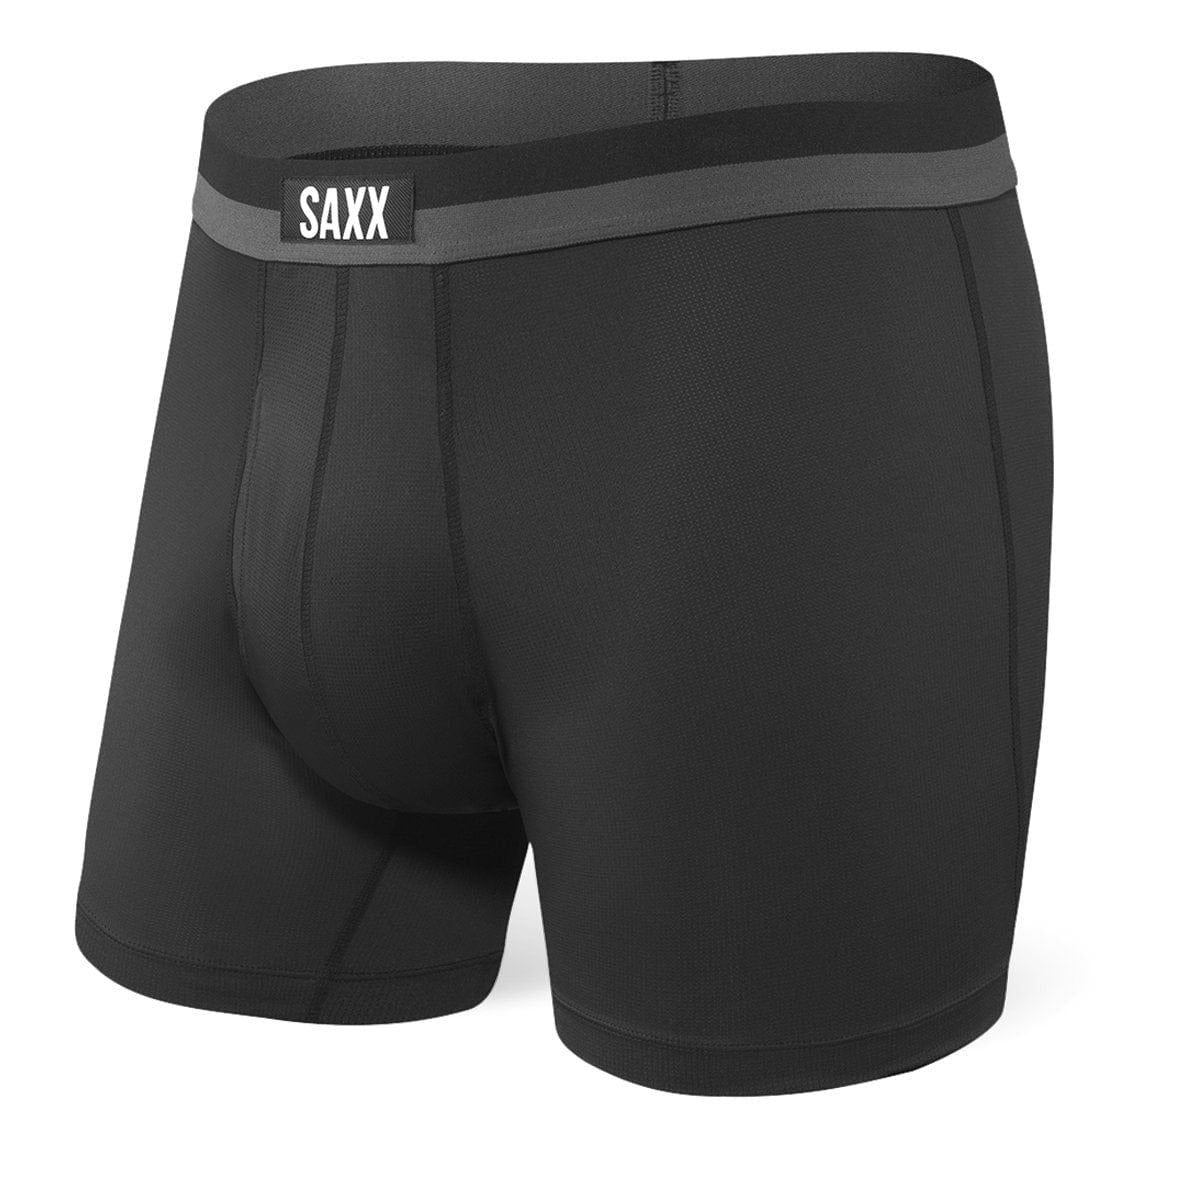 Saxx Sport Mesh Boxers - Black